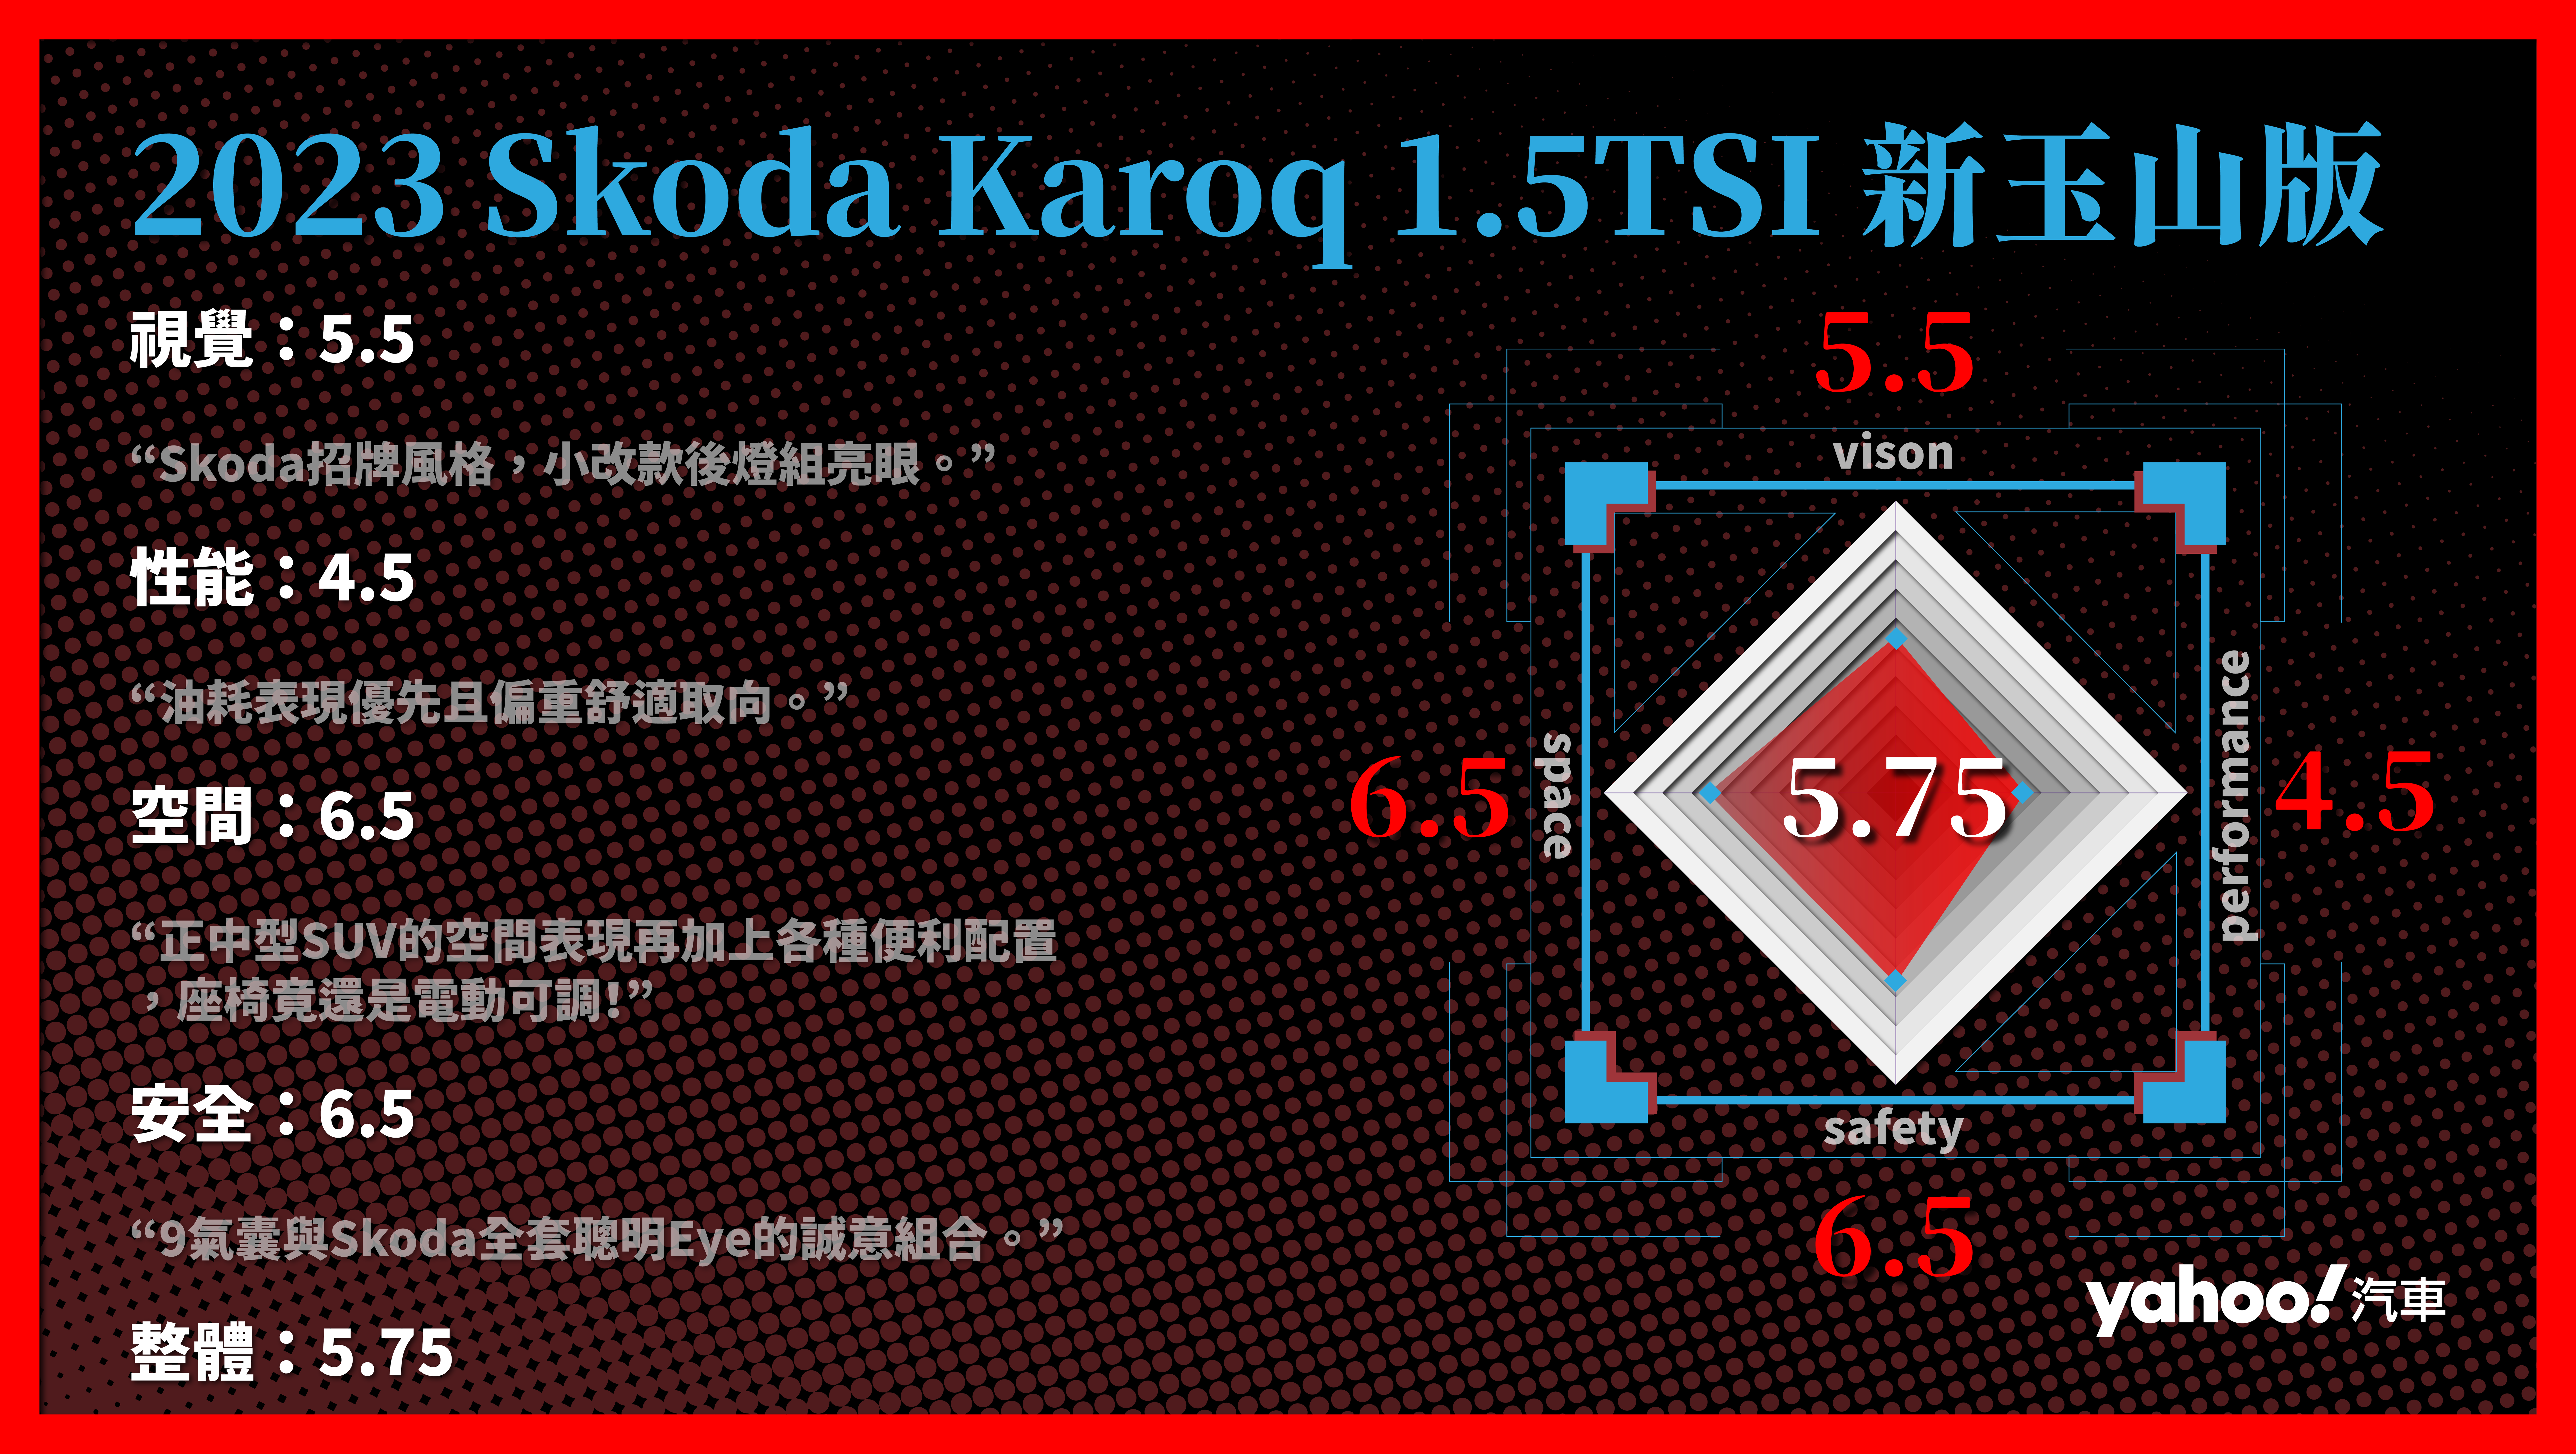 2023 Skoda Karoq 1.5TSI新玉山版 分項評比。